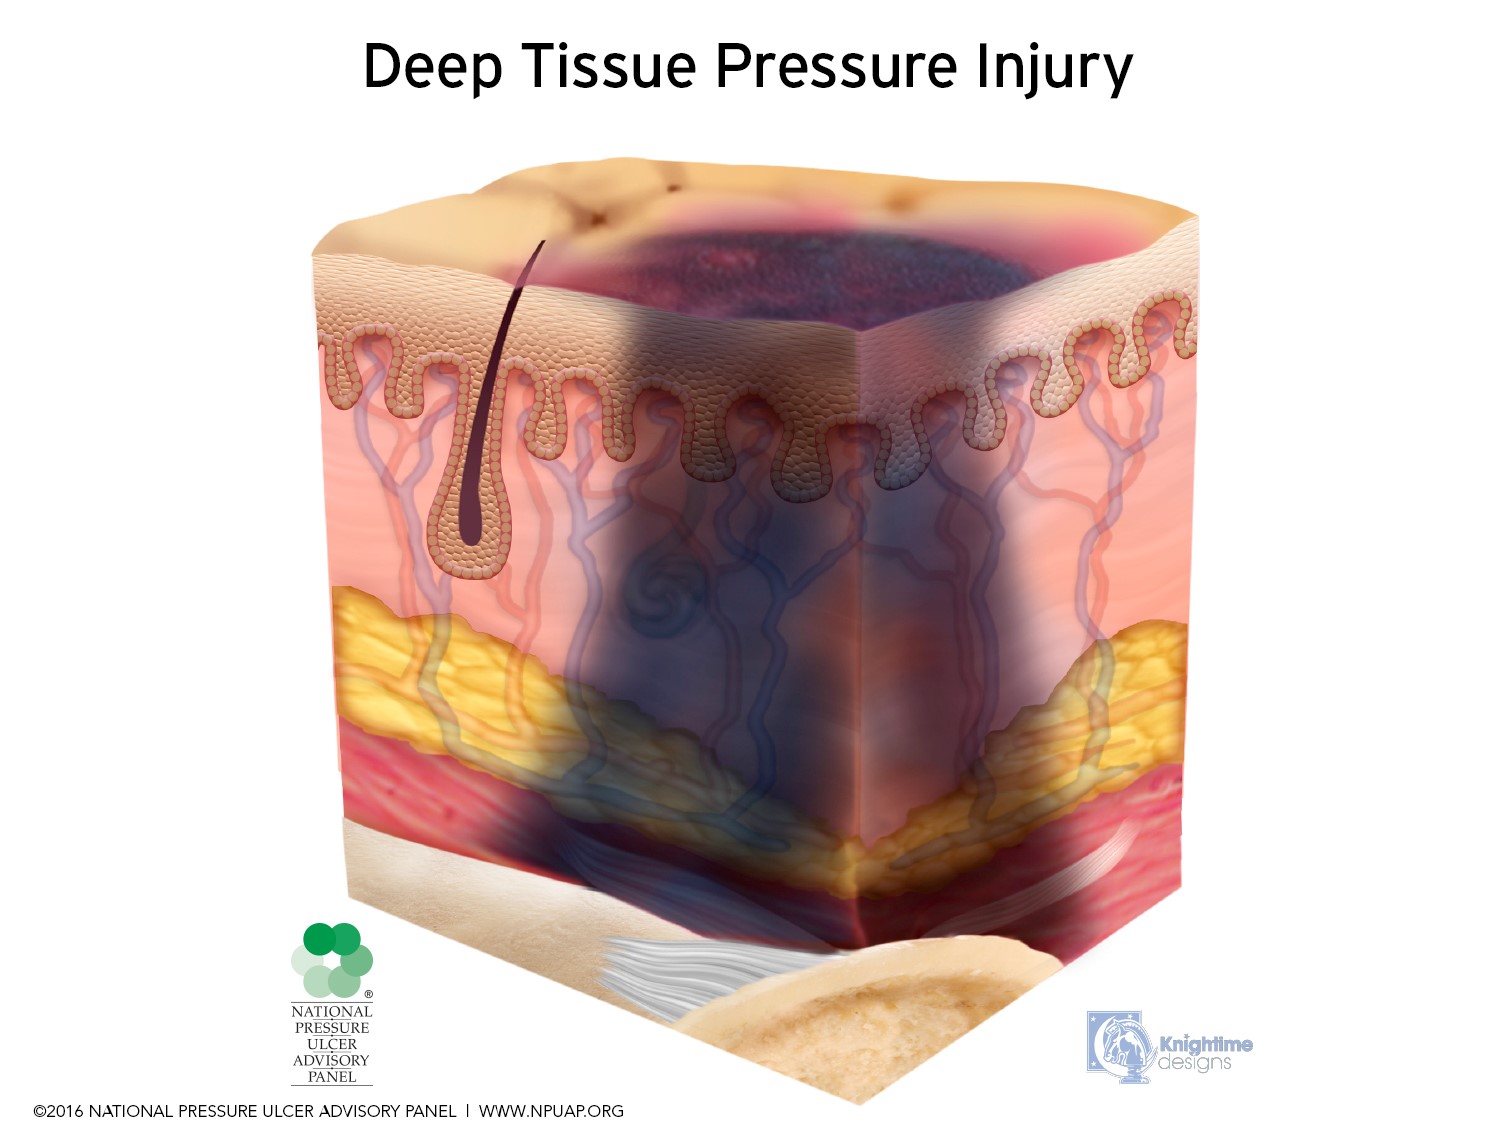 (http://woundeducators.com/wp-content/uploads/2017/09/Deep-Tissue-Pressure-Injury-April-2016.jpg)